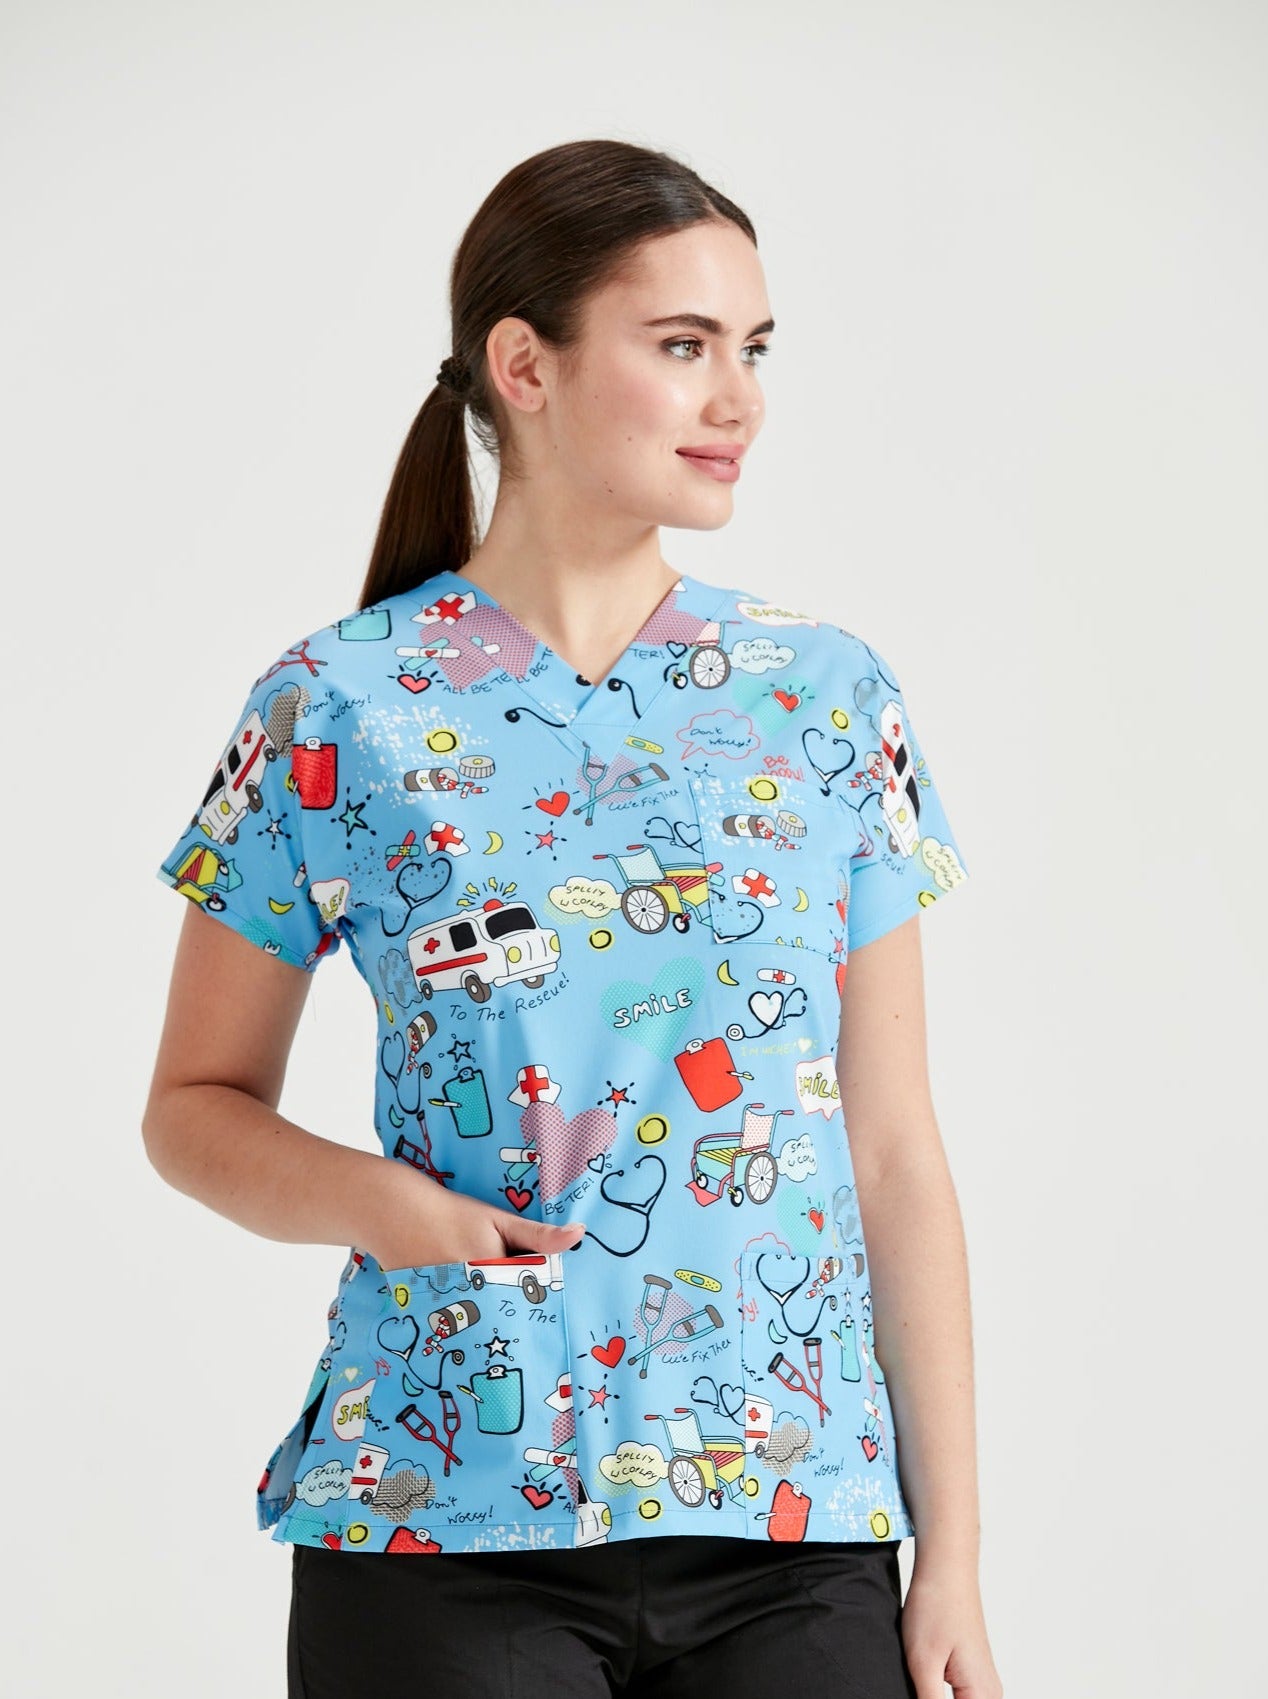 Asistenta medicala imbracata in bluza medicala de dama, cu elastan, Ambulance Turquoise, vedere din fata